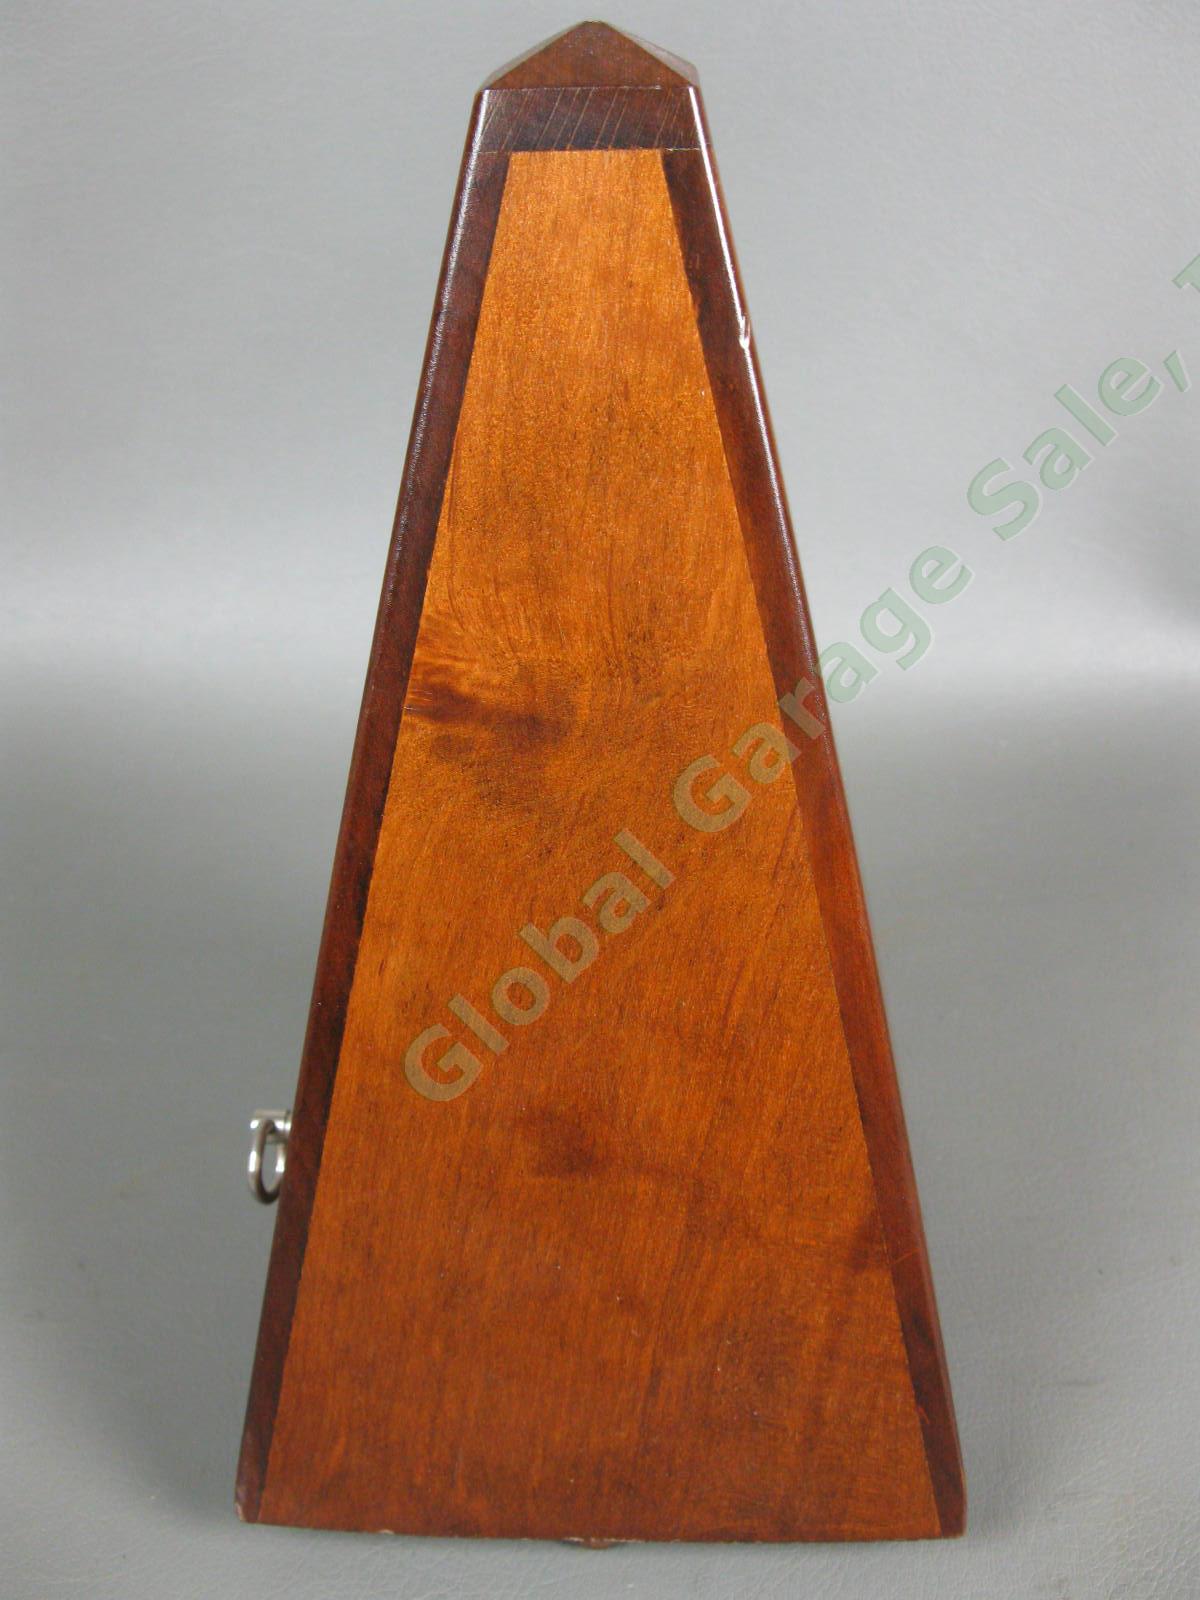 Vintage Wittner Metronome 803m Germany Wood Pyramid Adjustable Speed WORKING 3